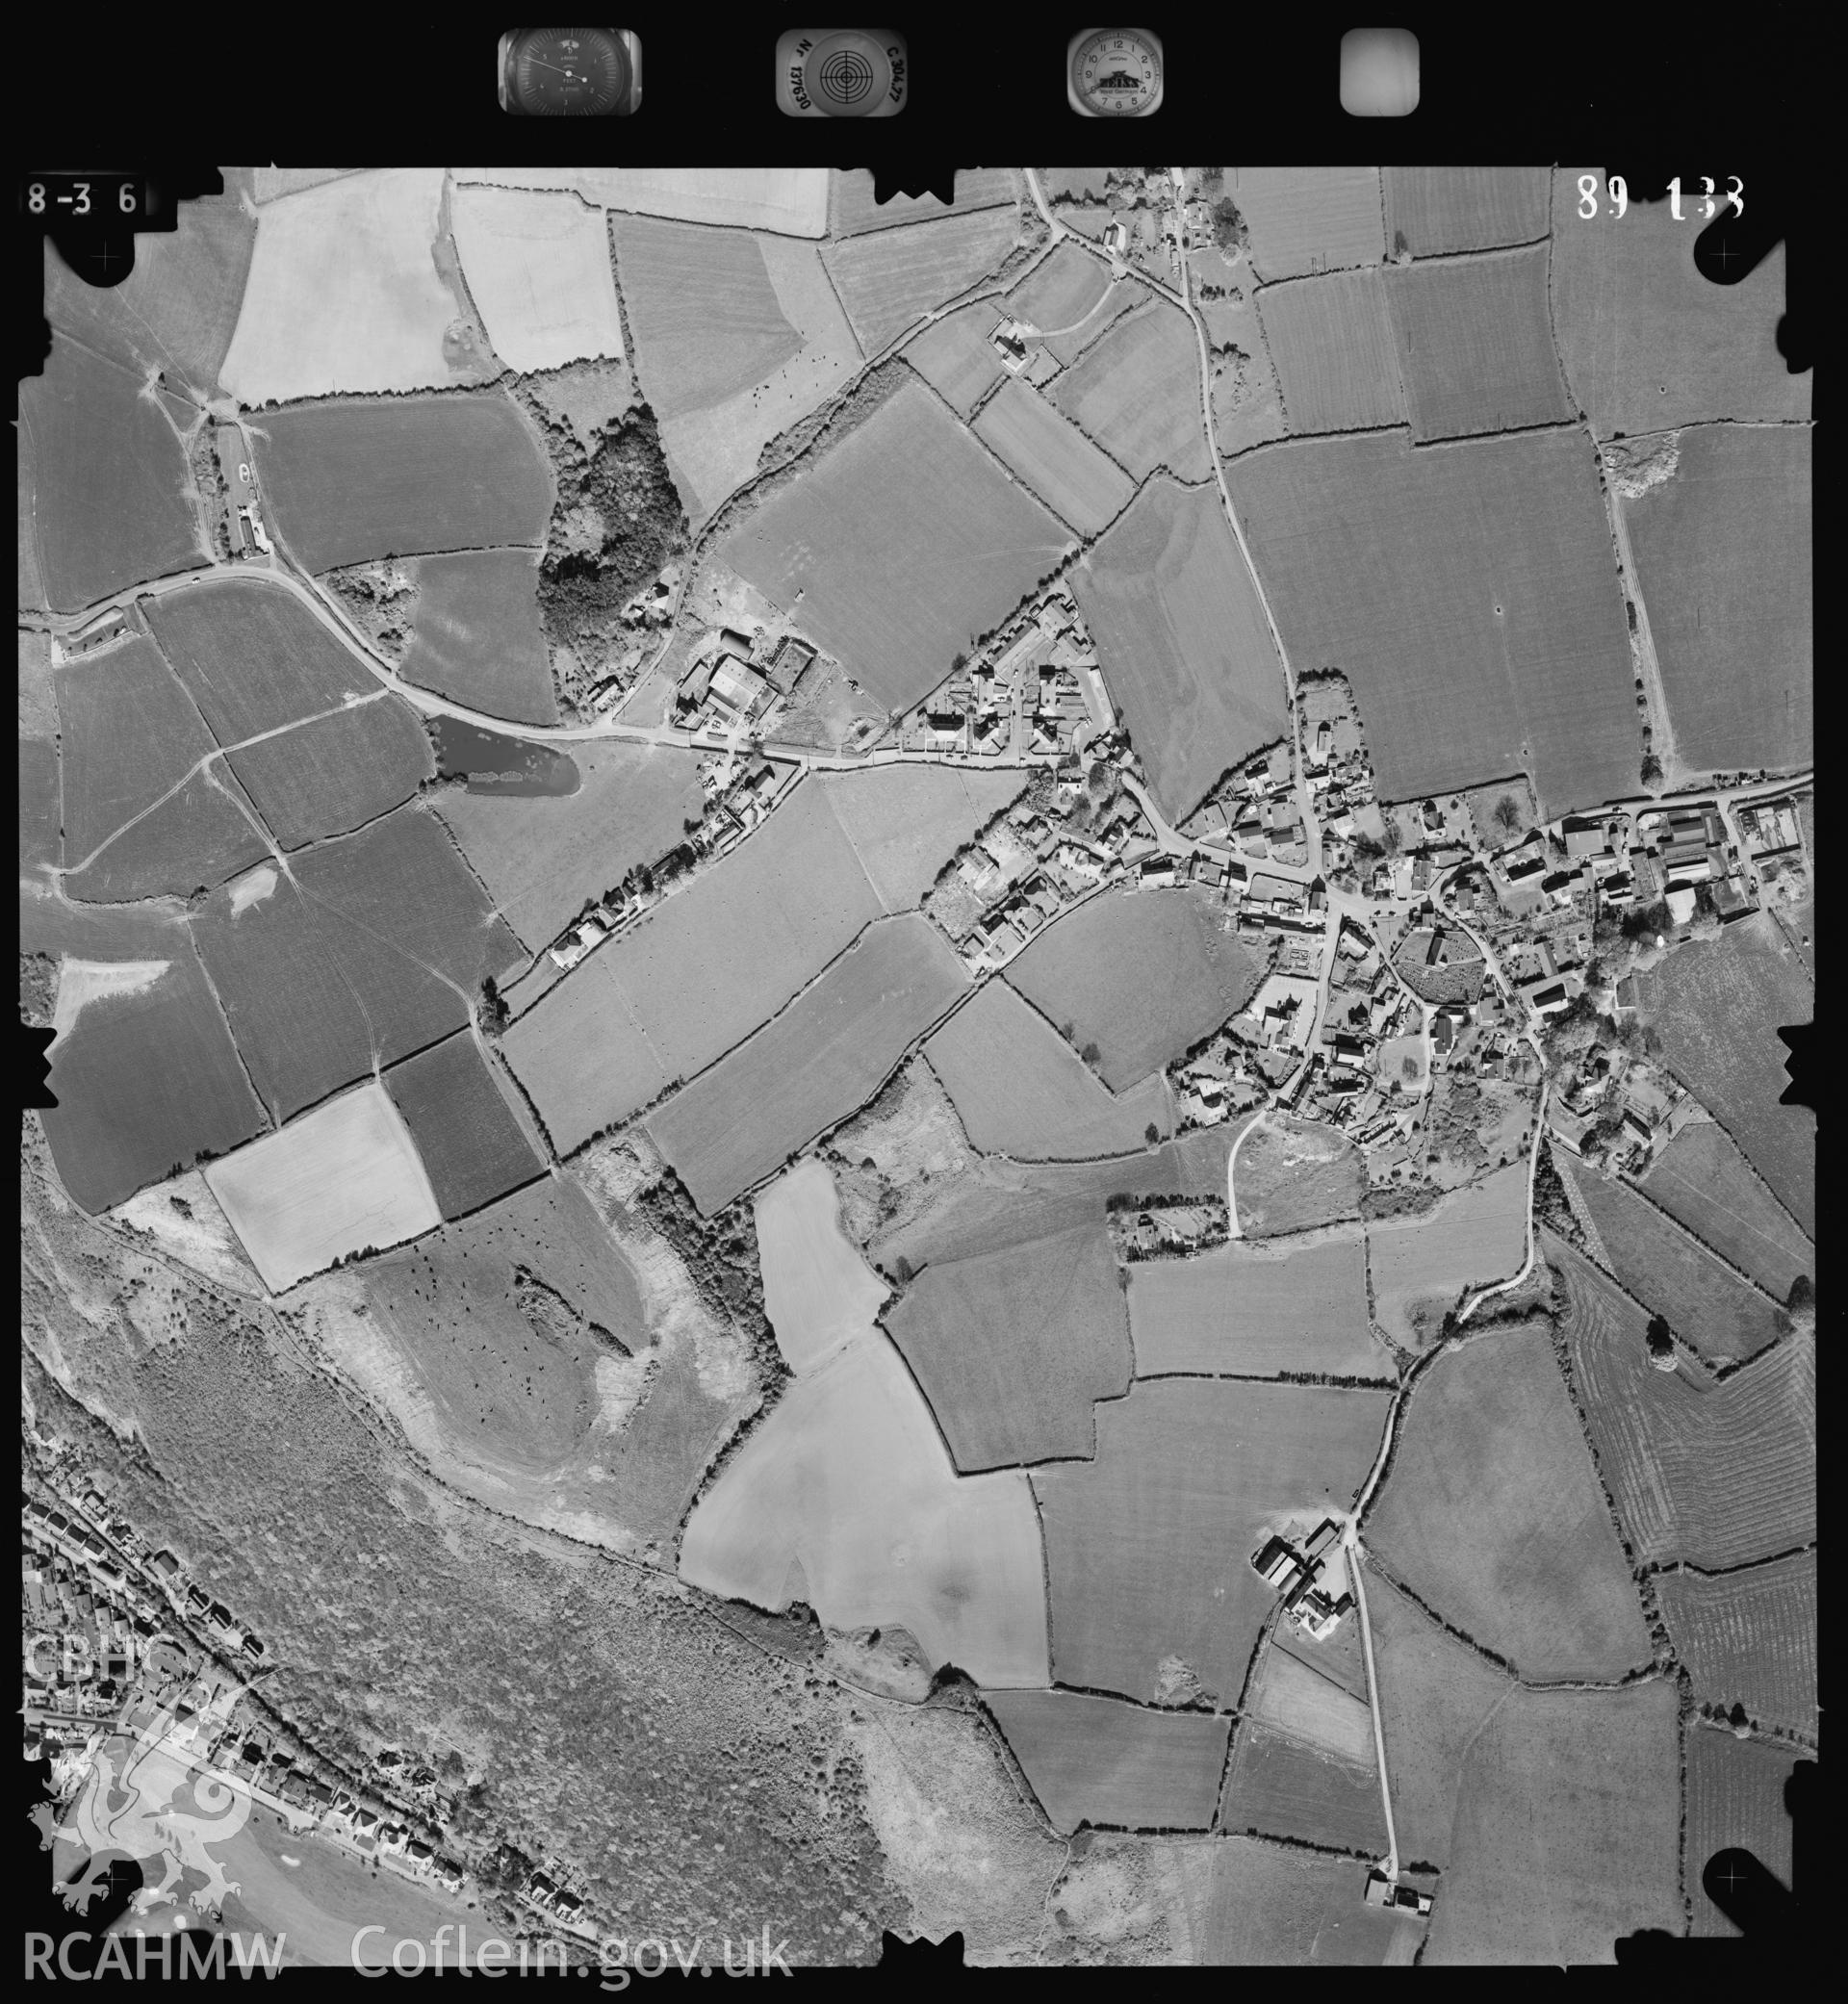 Digitized copy of an aerial photograph showing the Gwaenysgor area Flintshire SJ0781.,  taken by Ordnance Survey, 1989.